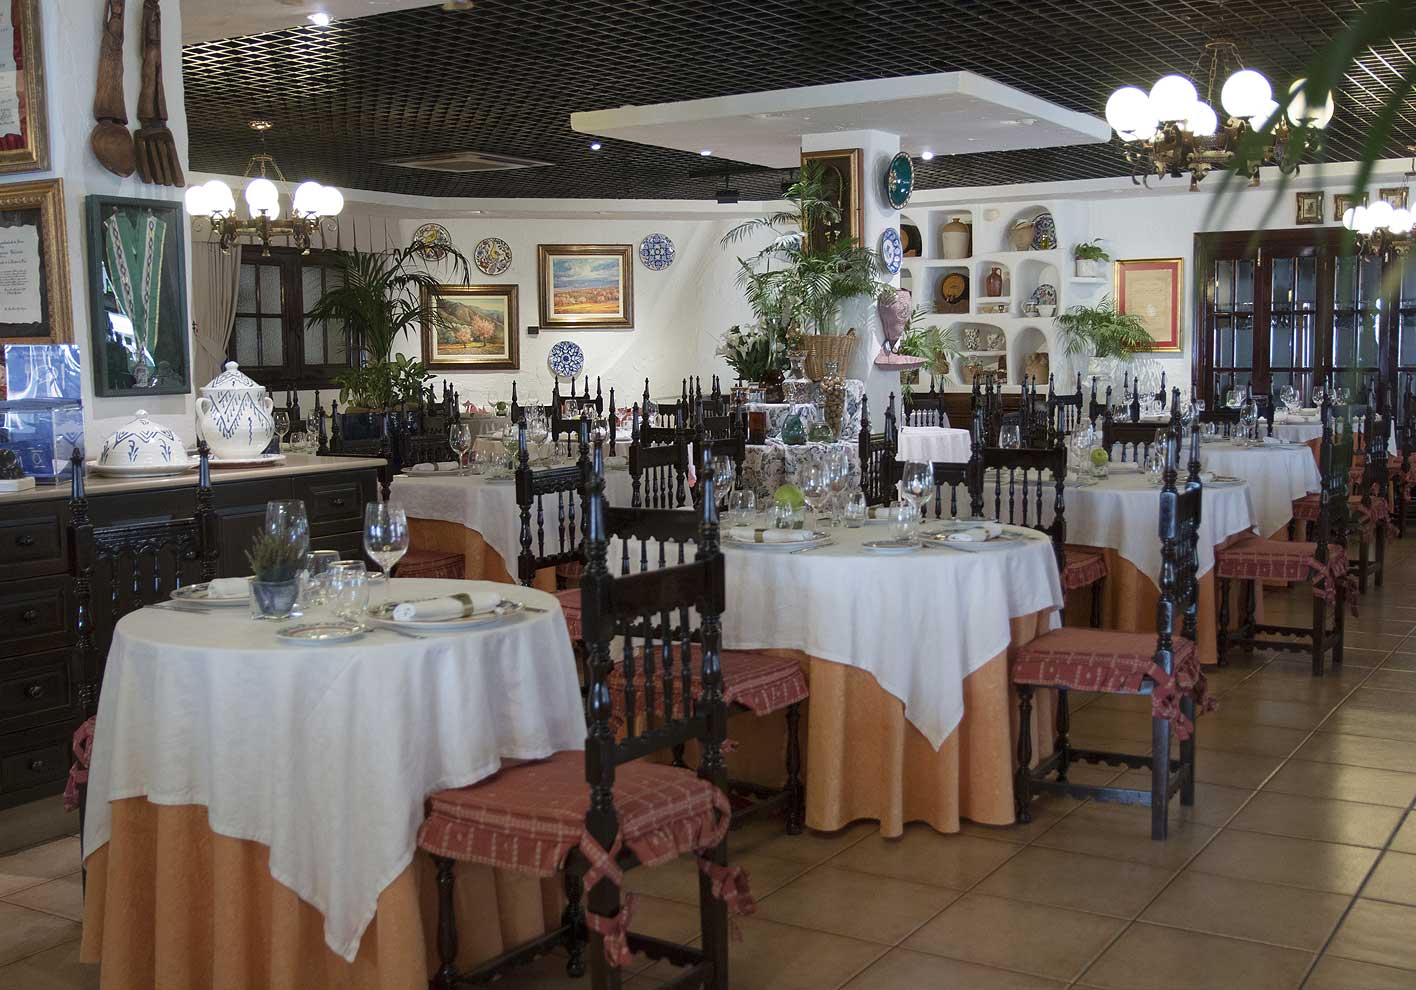 Main Dining Room 02 - Hotel Restaurante Terraza Carmona in Vera, Almeria